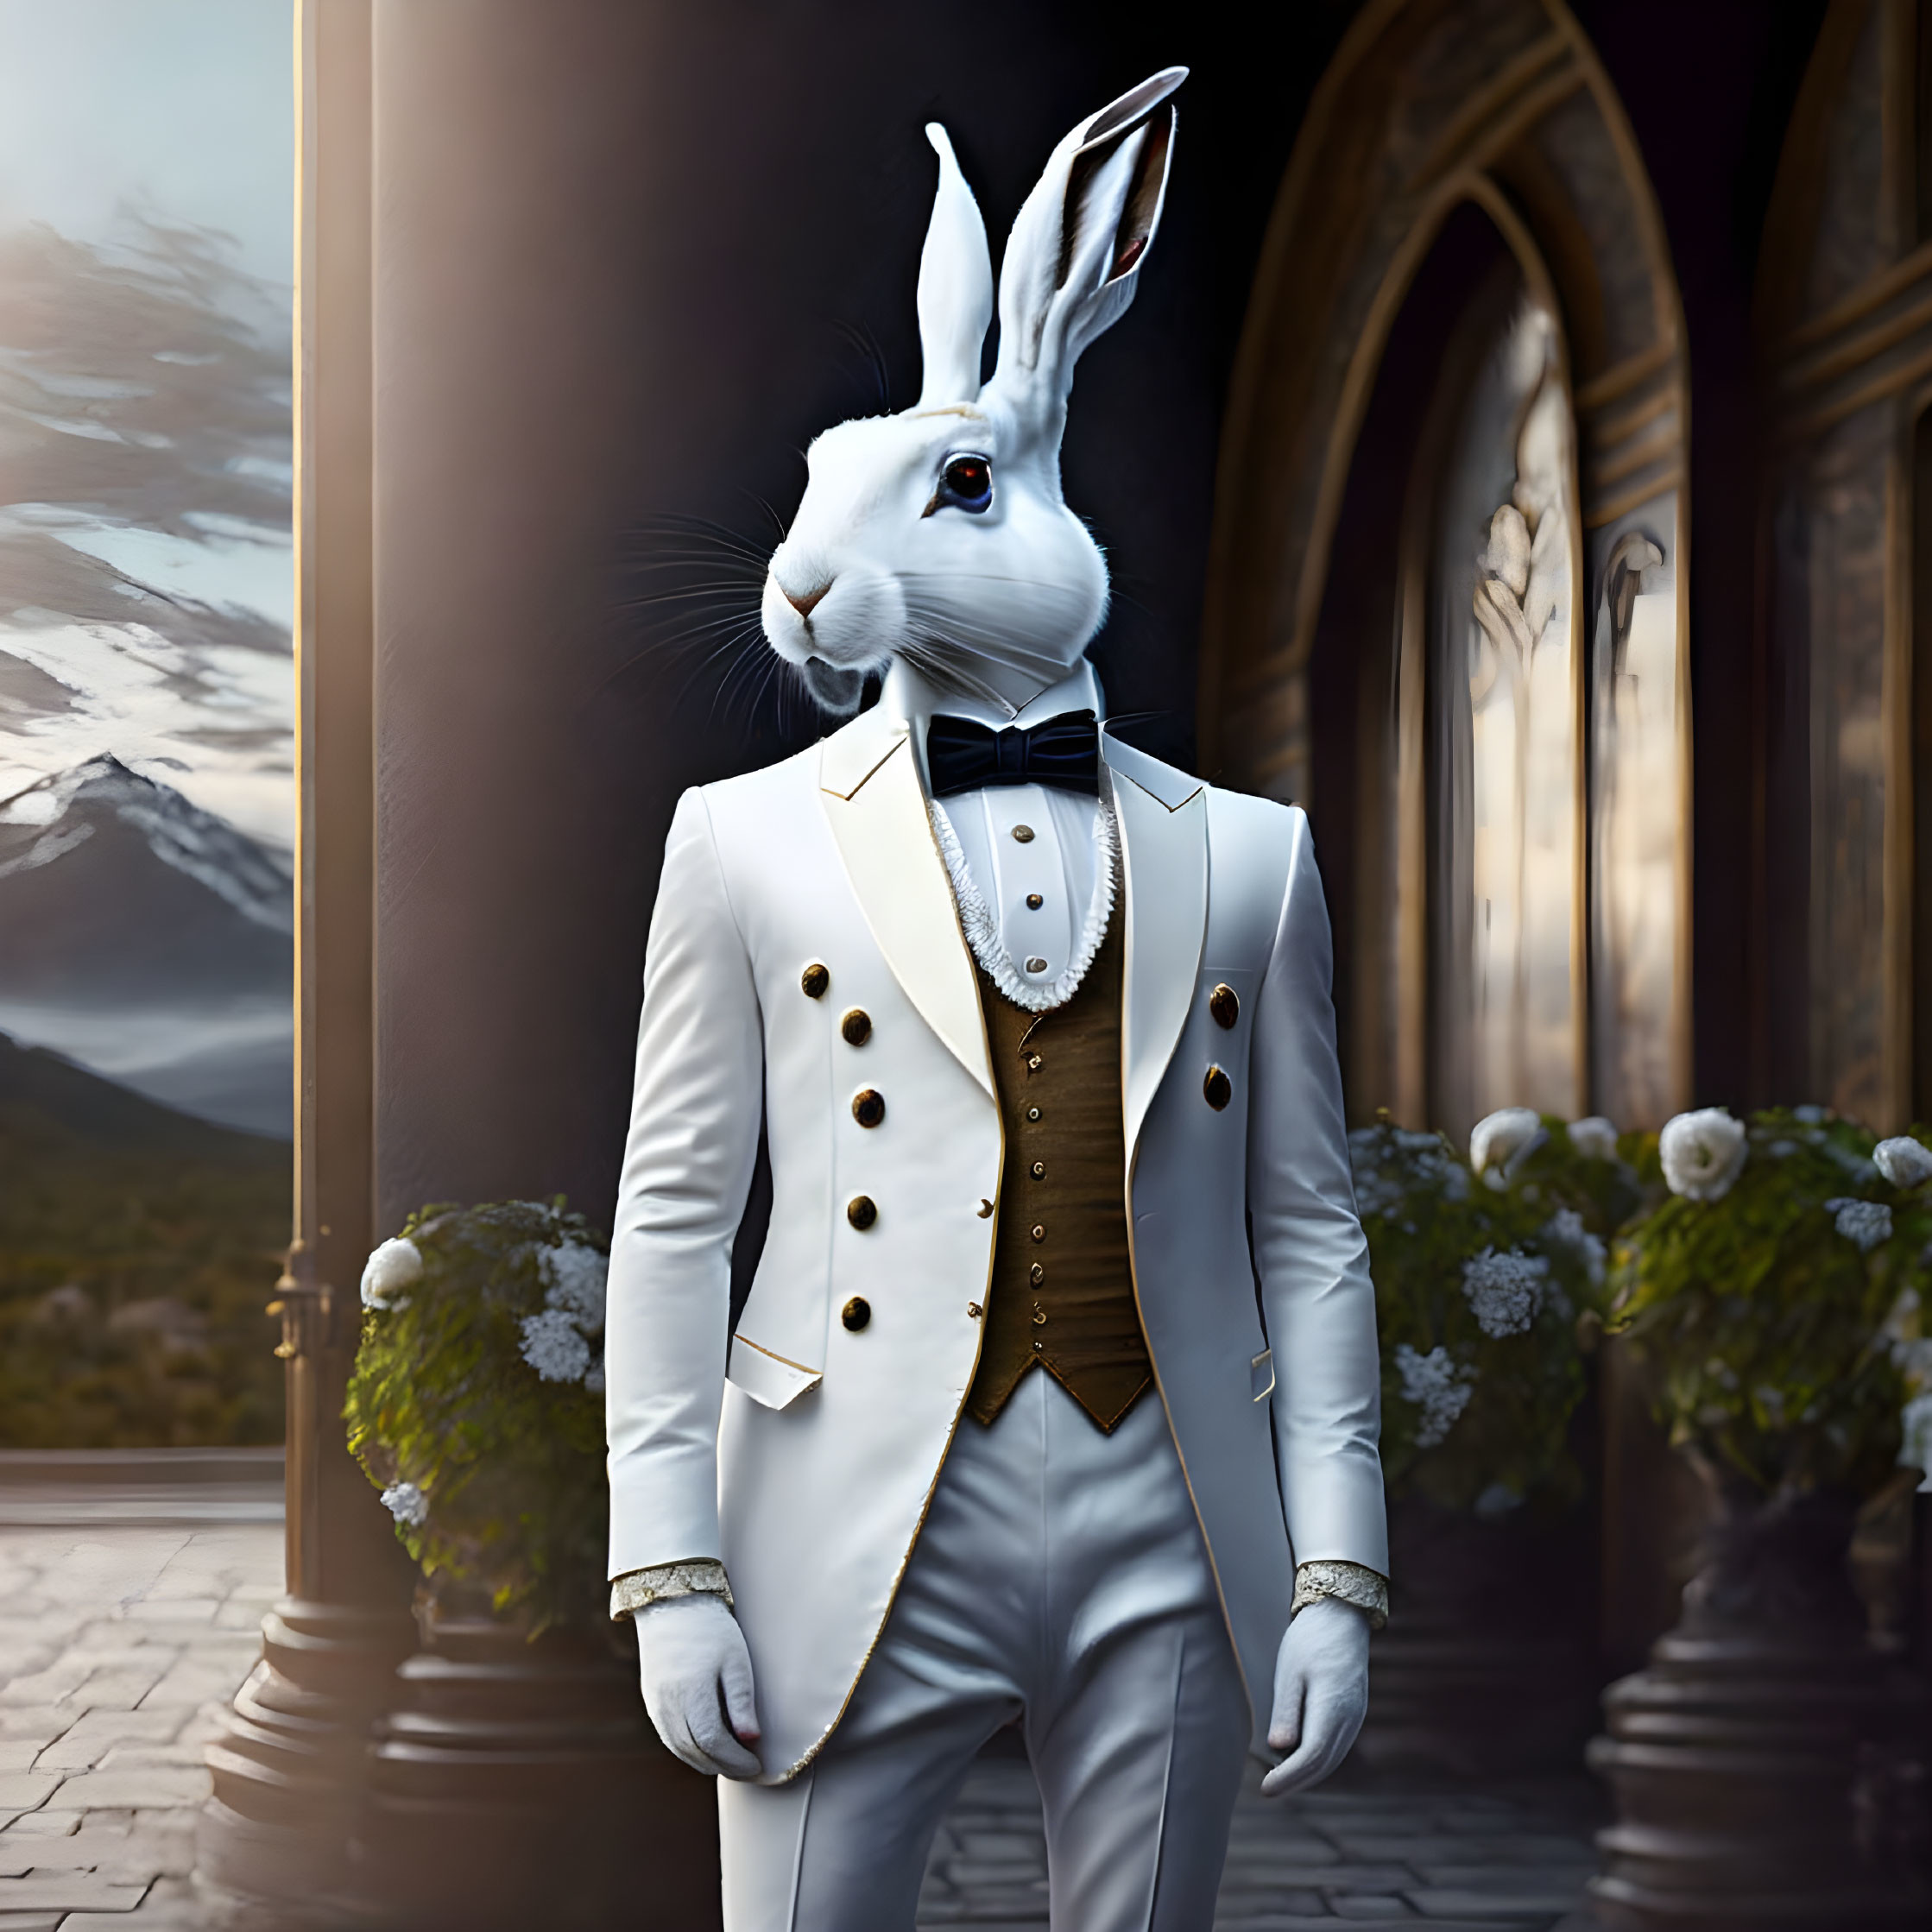 White rabbit in elegant suit before grand castle-like building against dramatic sky.